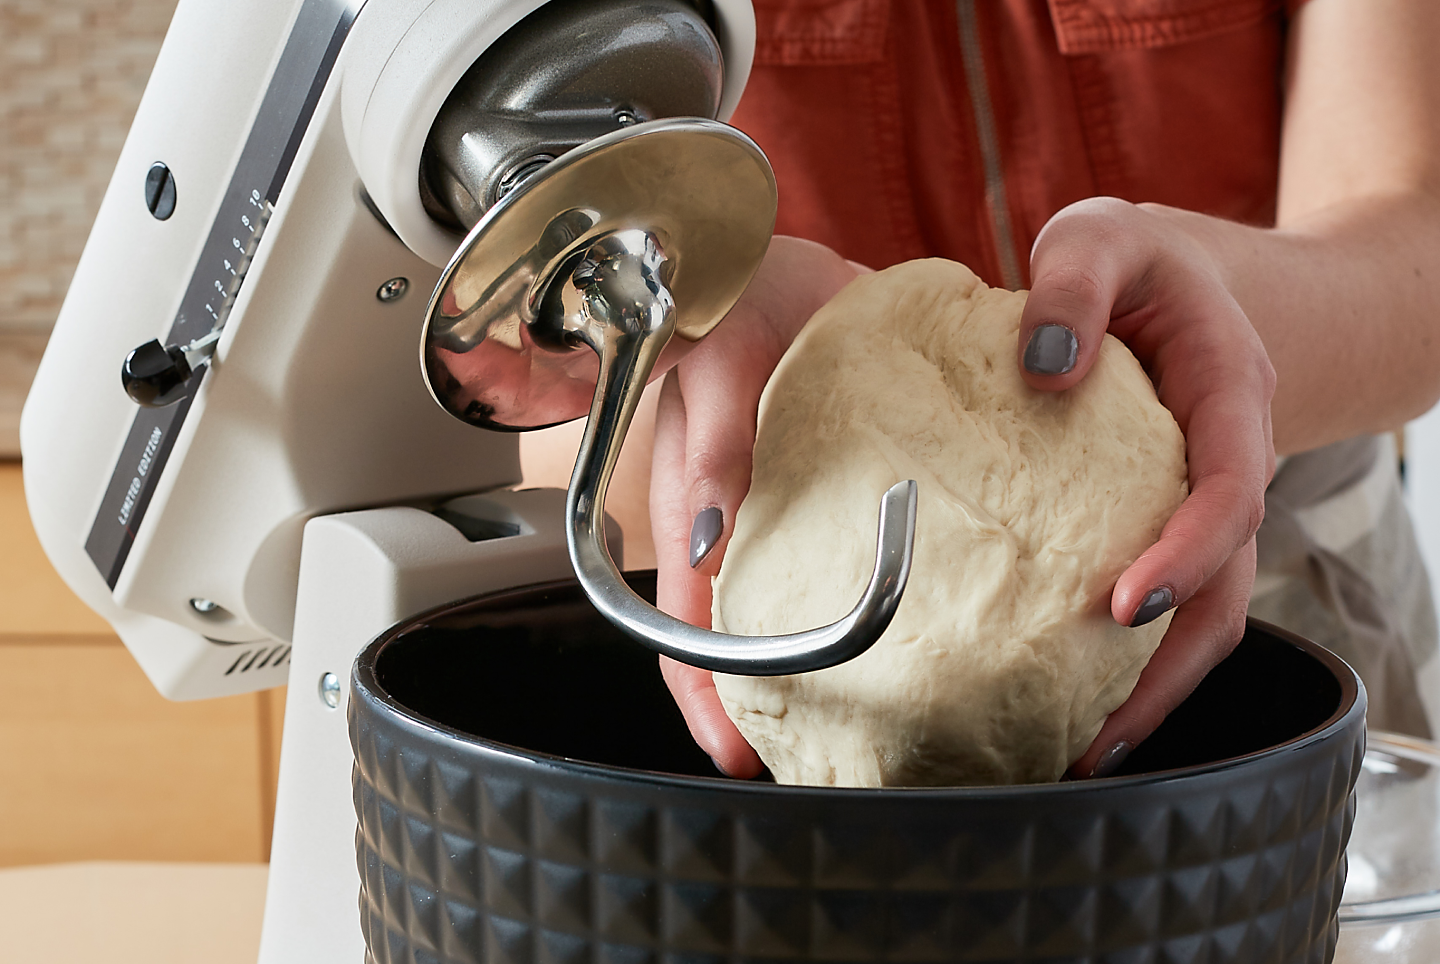 KitchenAid Dough Hook vs Spiral: Which to Choose?